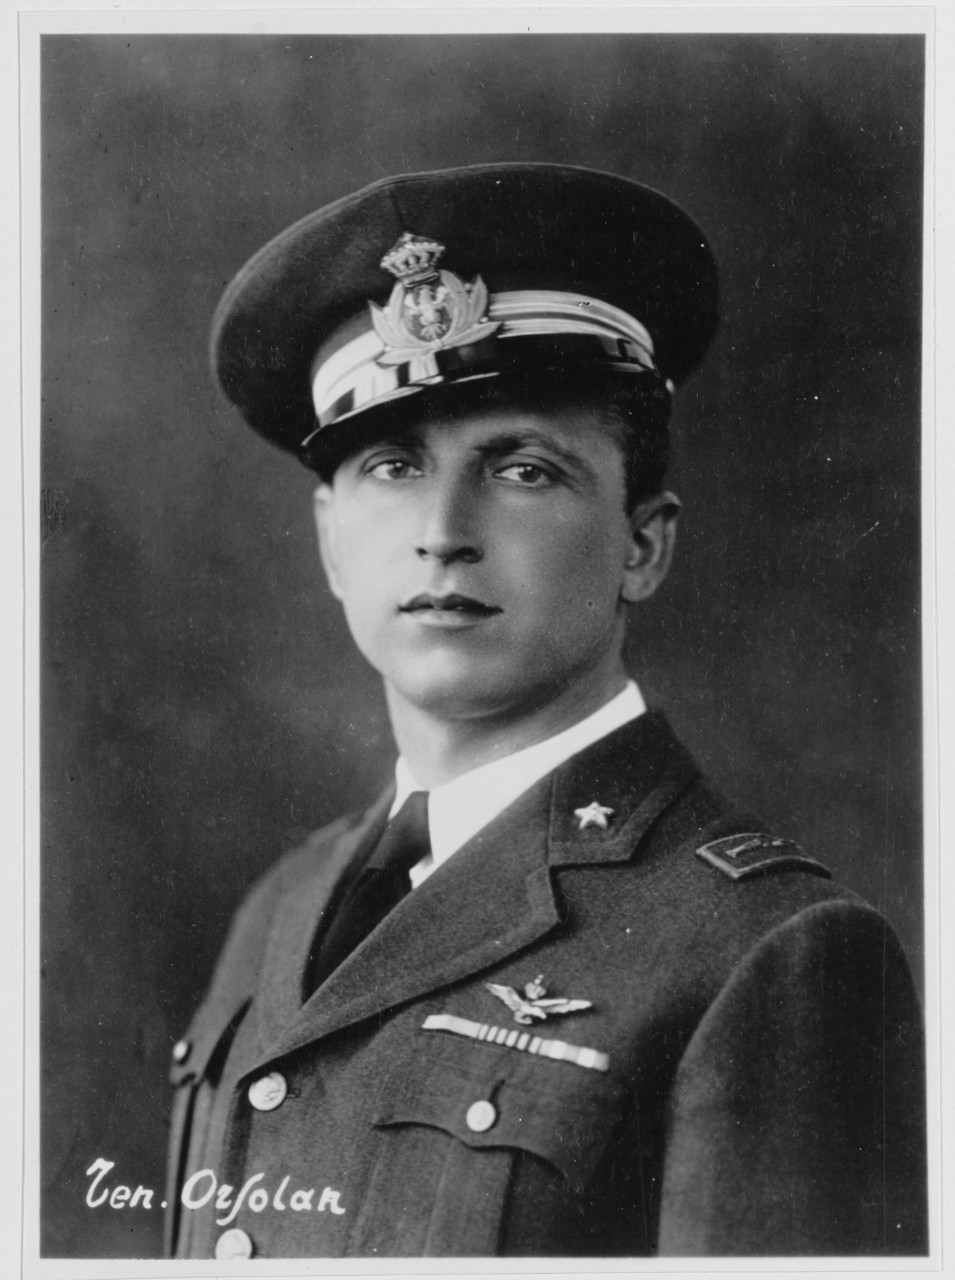 General Orsolan, Italian Aviators who flew Savoia-Machetti Seaplanes Trans-Atlantic, 1933